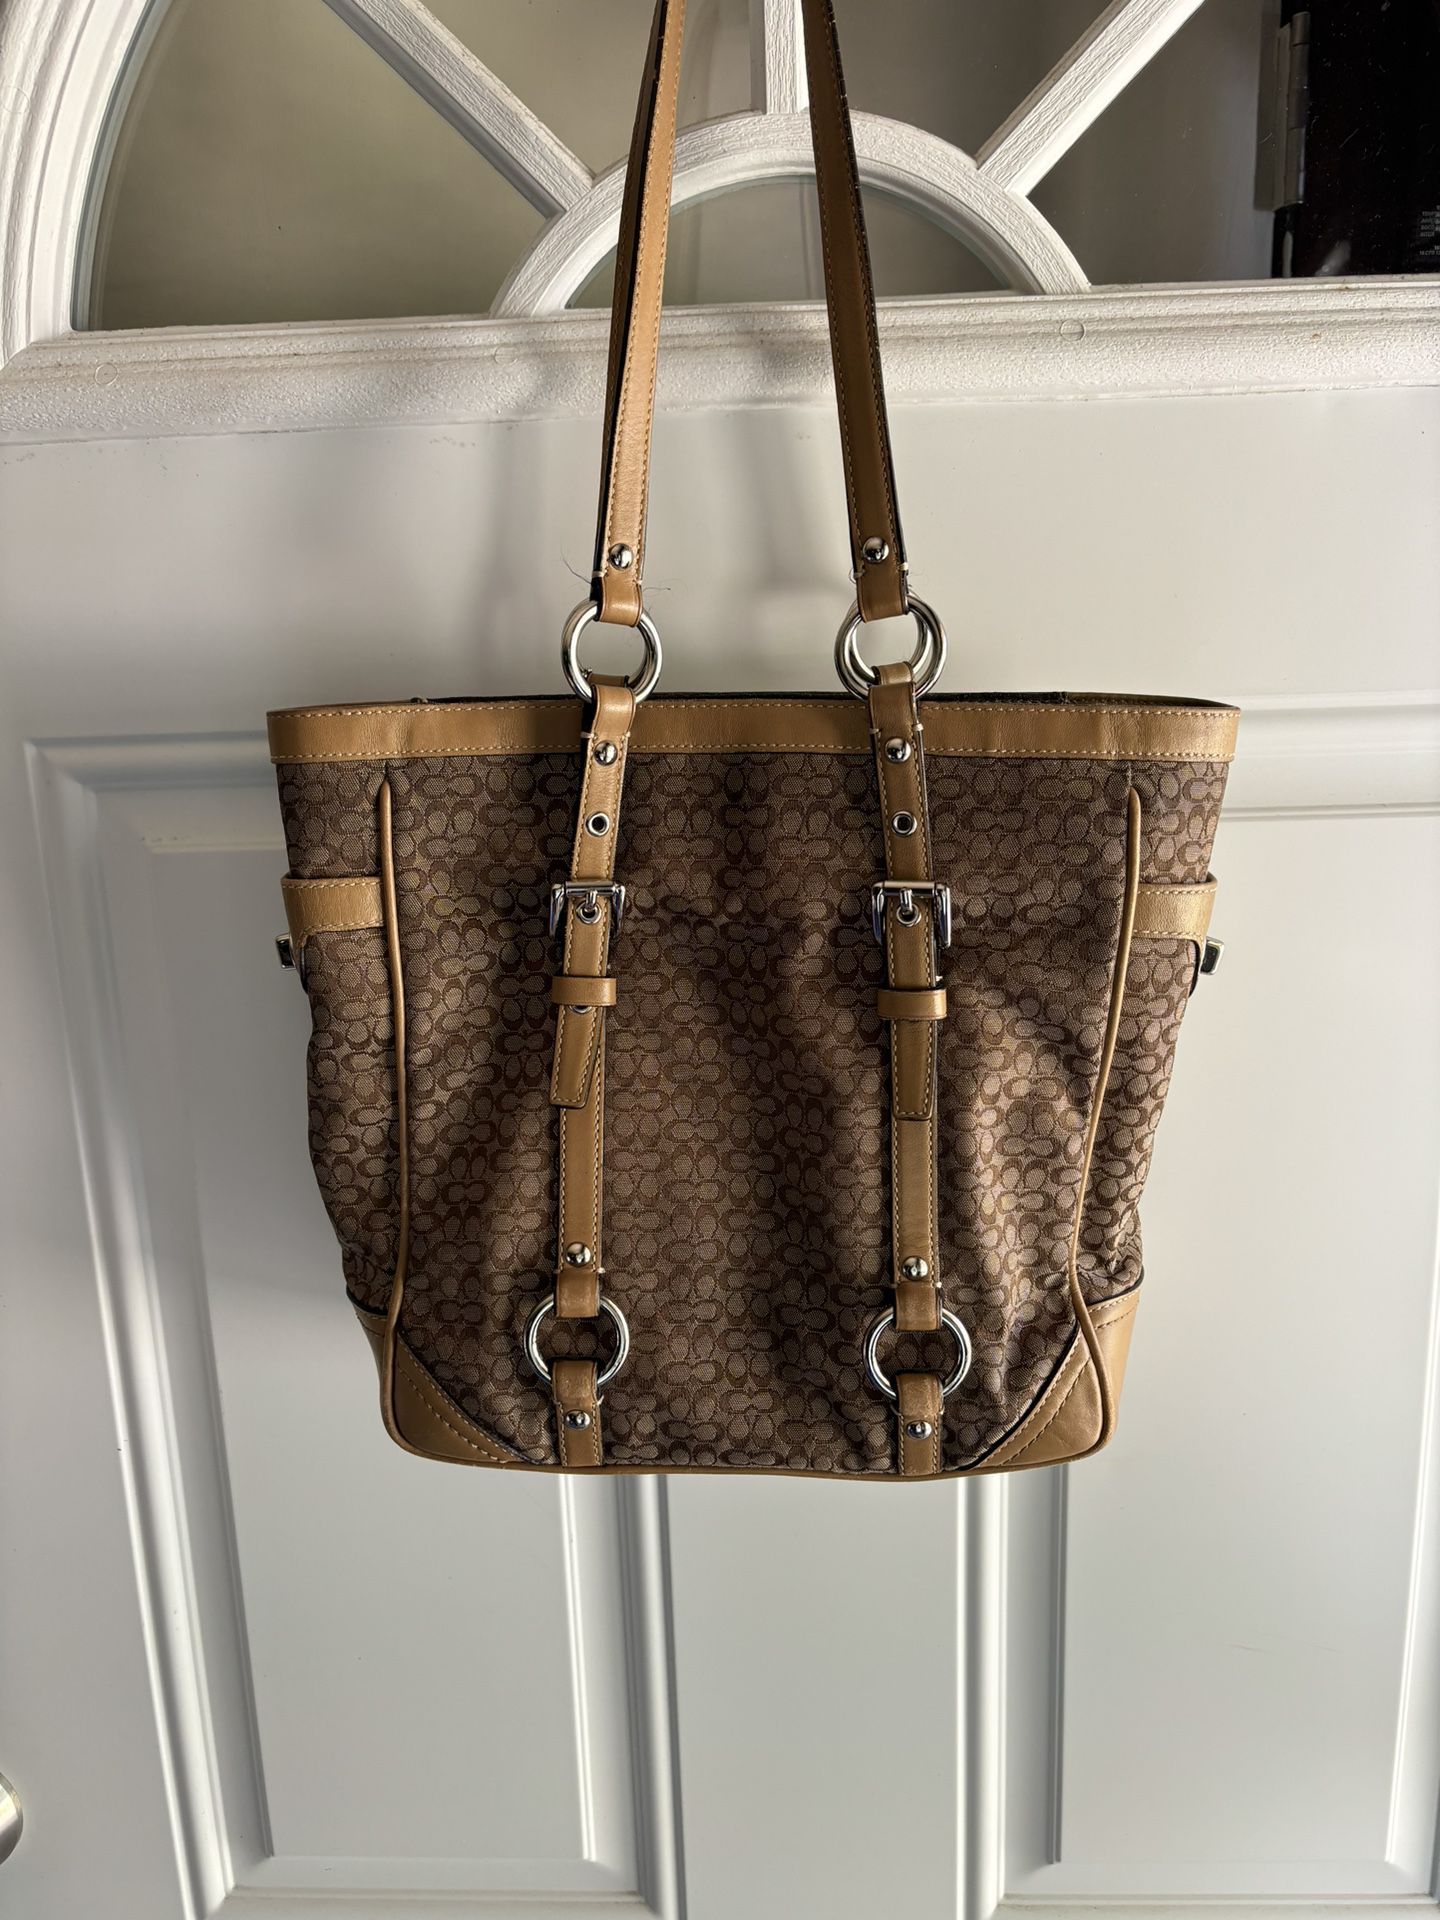 COACH Signature Khaki/Brown Jacquard Leather Tote Bag Purse- $398 Retail